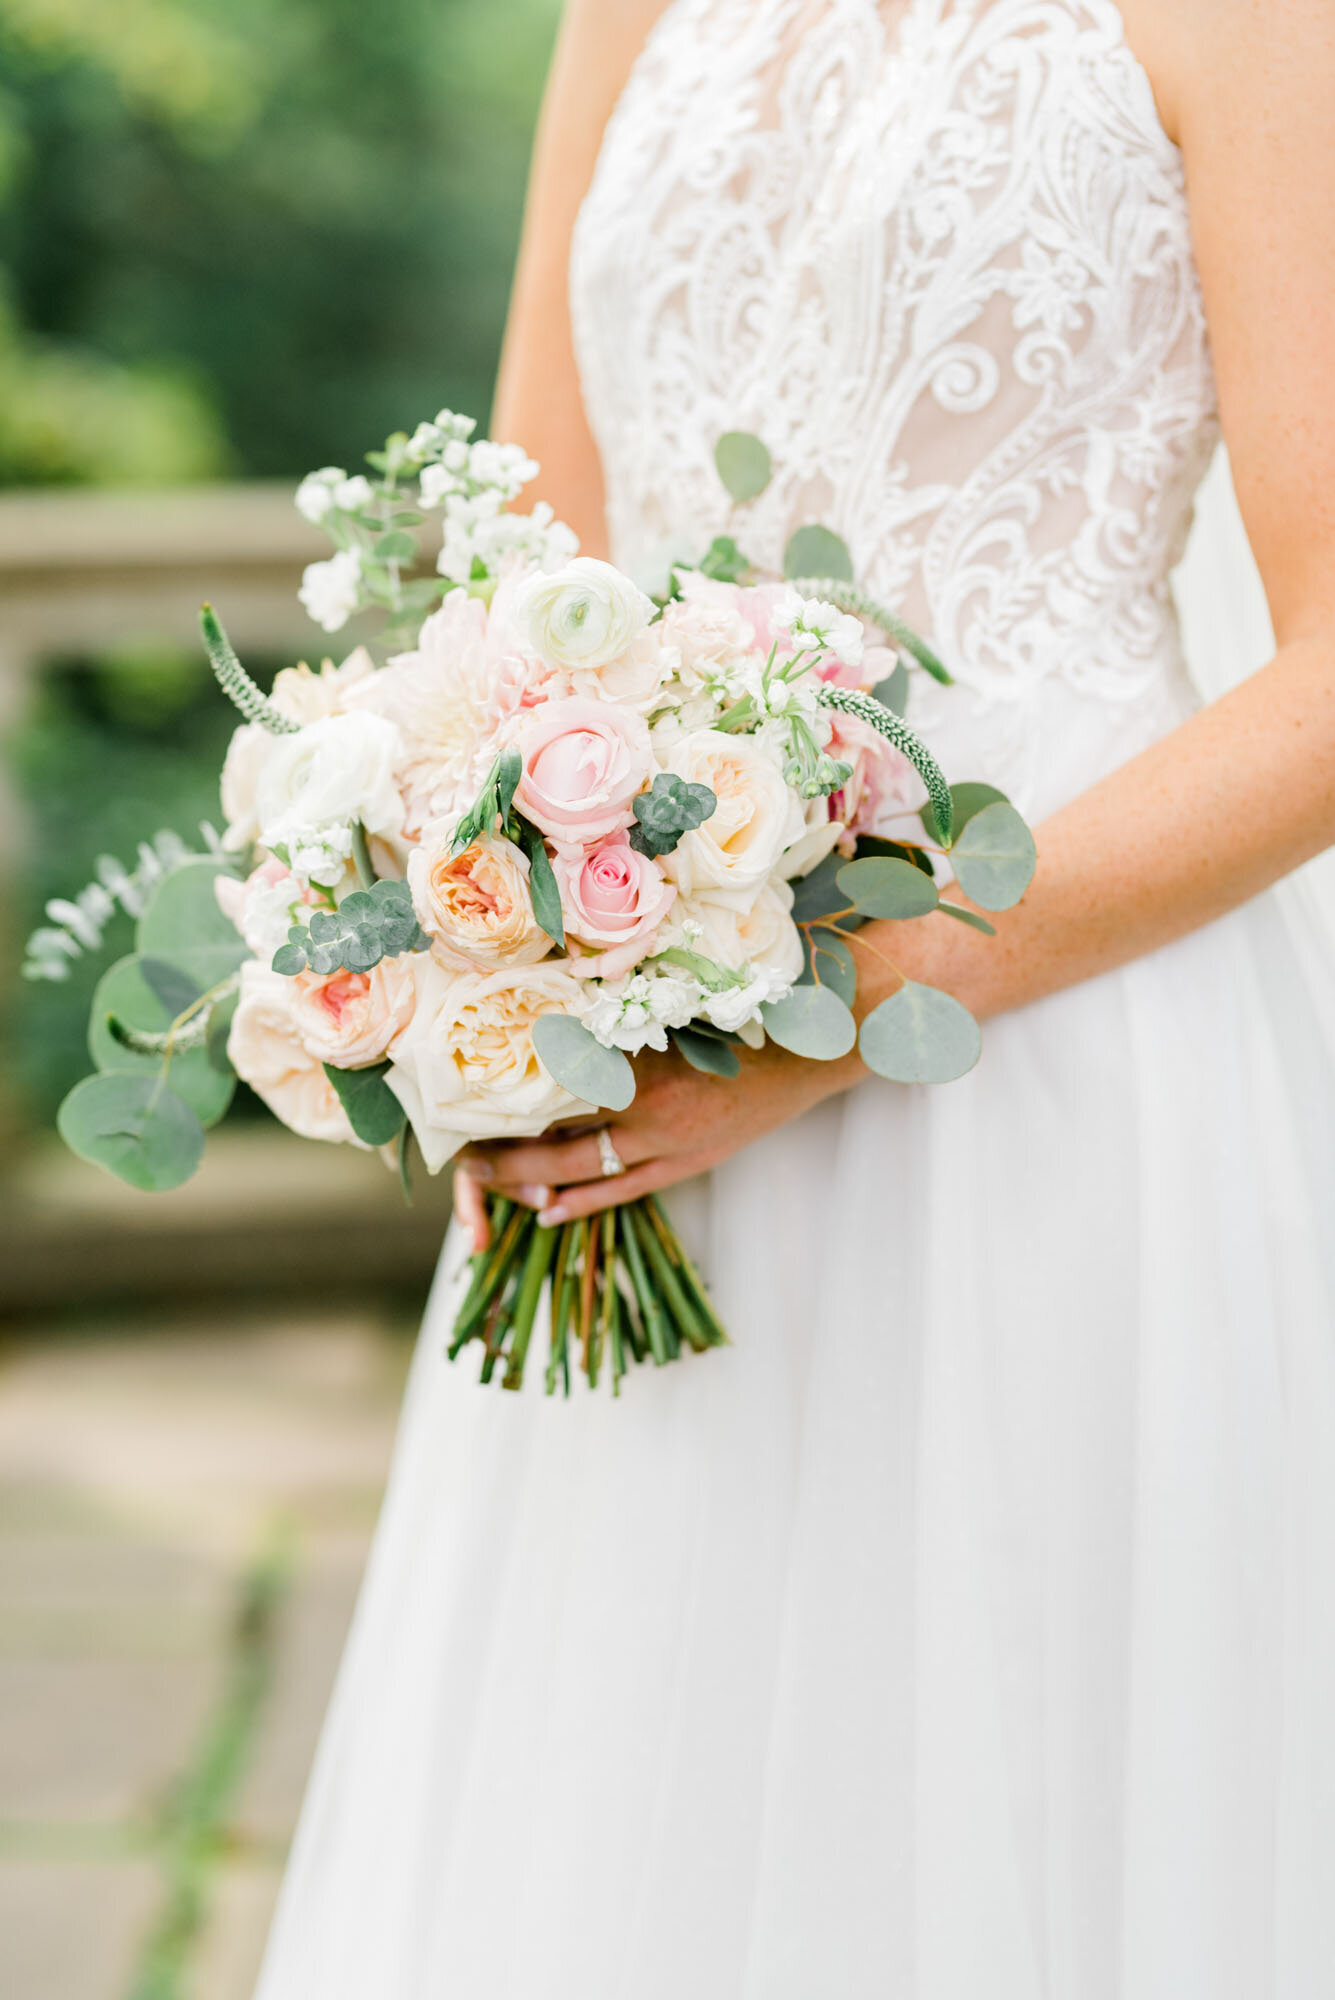 Kristin Leanne Photography - Diana Elizabeth Designs Cleveland Wedding Florist - 52